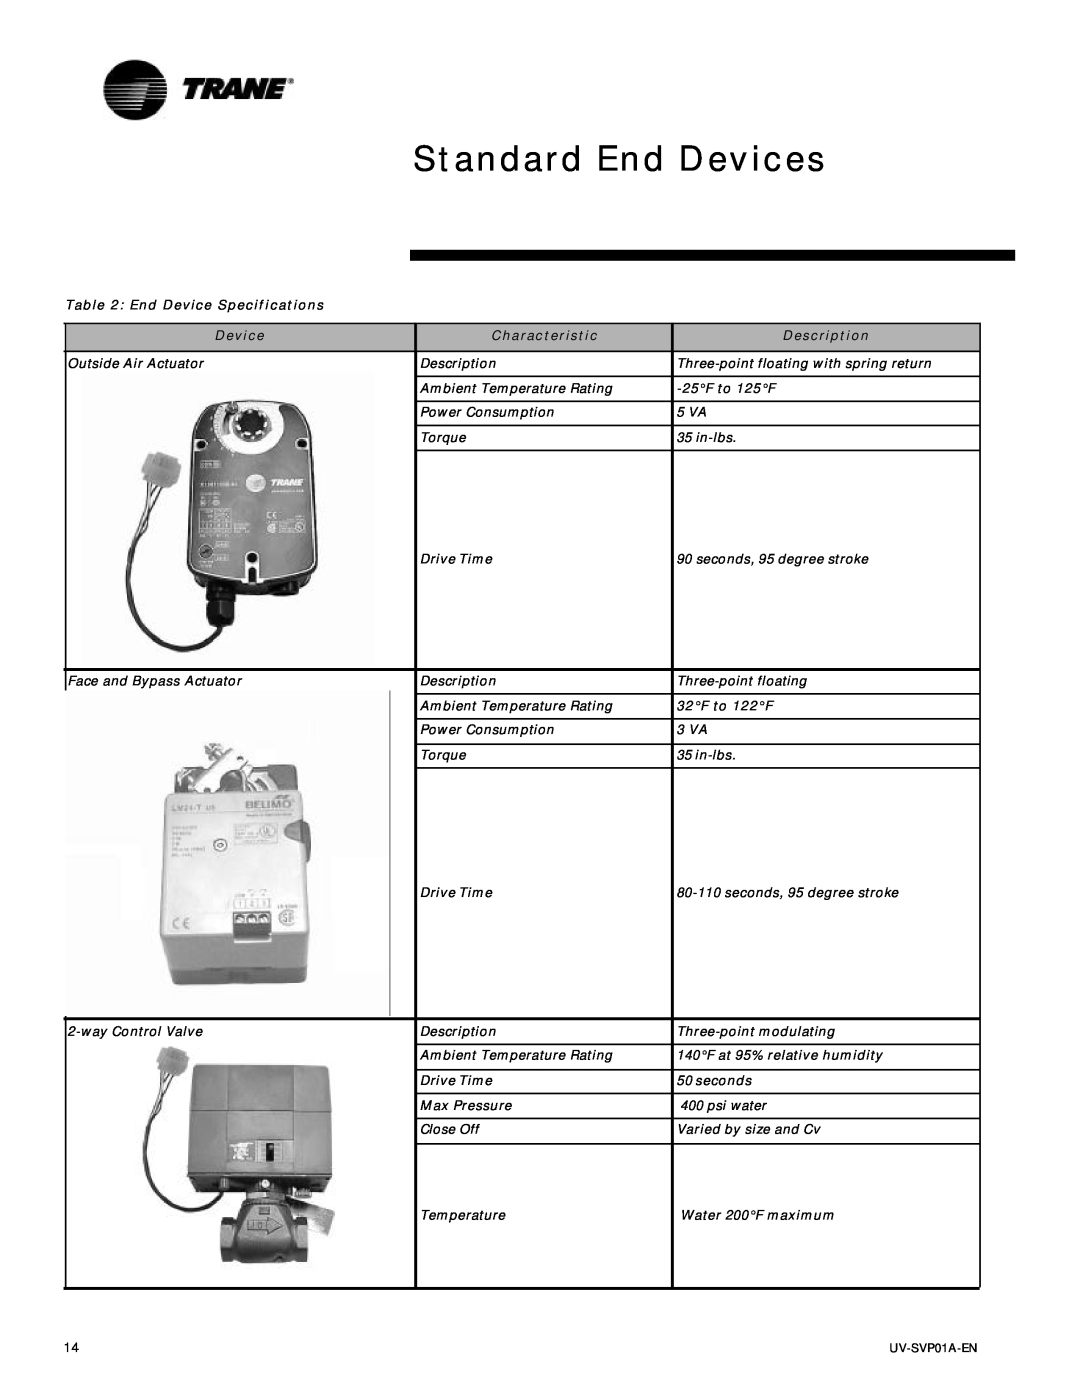 Trane Tracer Unit Ventilator, ZN.520 Standard End Devices, End Device Specifications Device, Characteristic, Description 